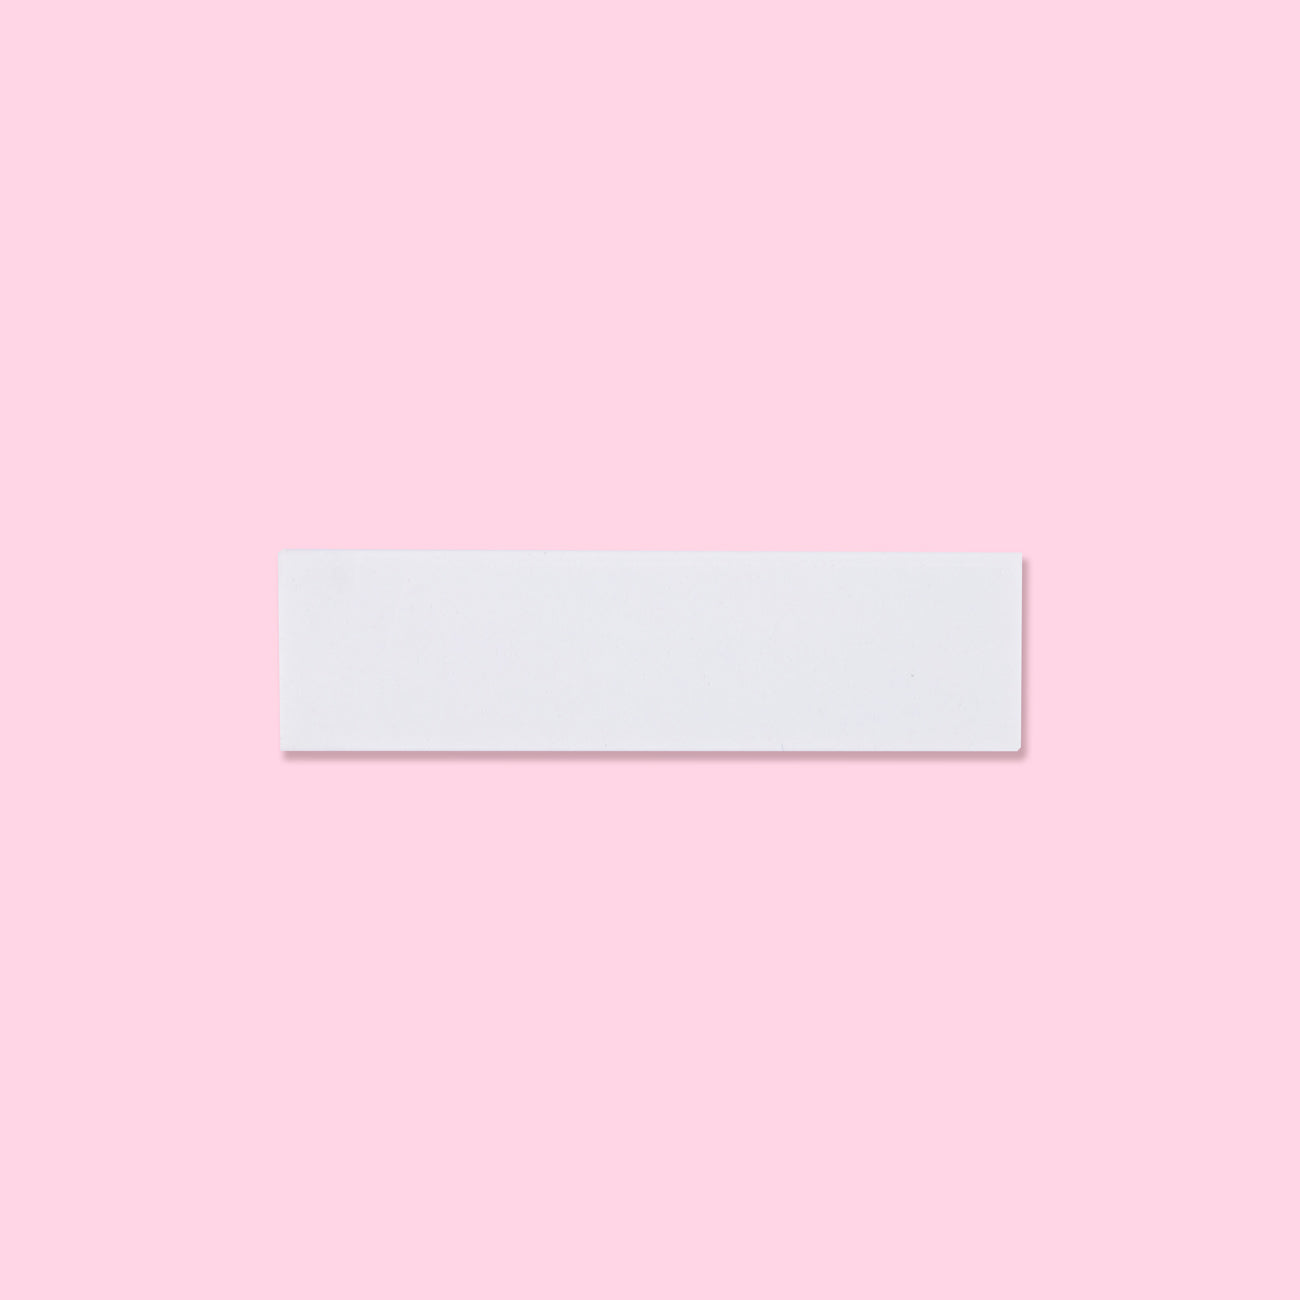 Pentel Ain Hi-Polymer Eraser - Pink reviews in Home Office - ChickAdvisor